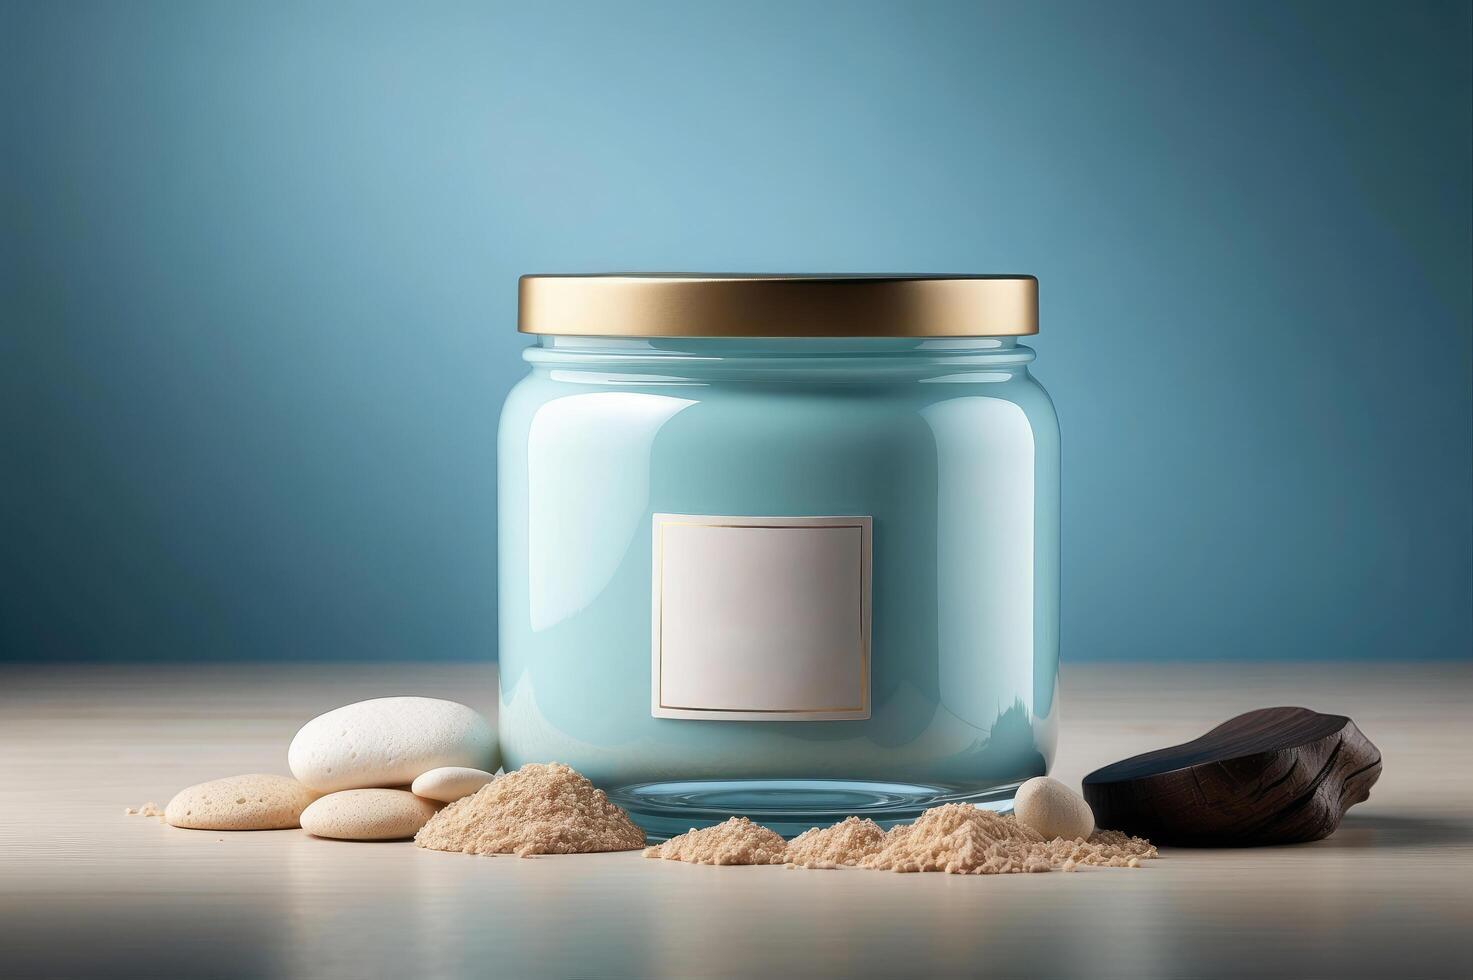 elegant blauw glas pot met houten deksel en blanco etiket - modern keuken opslagruimte oplossing foto